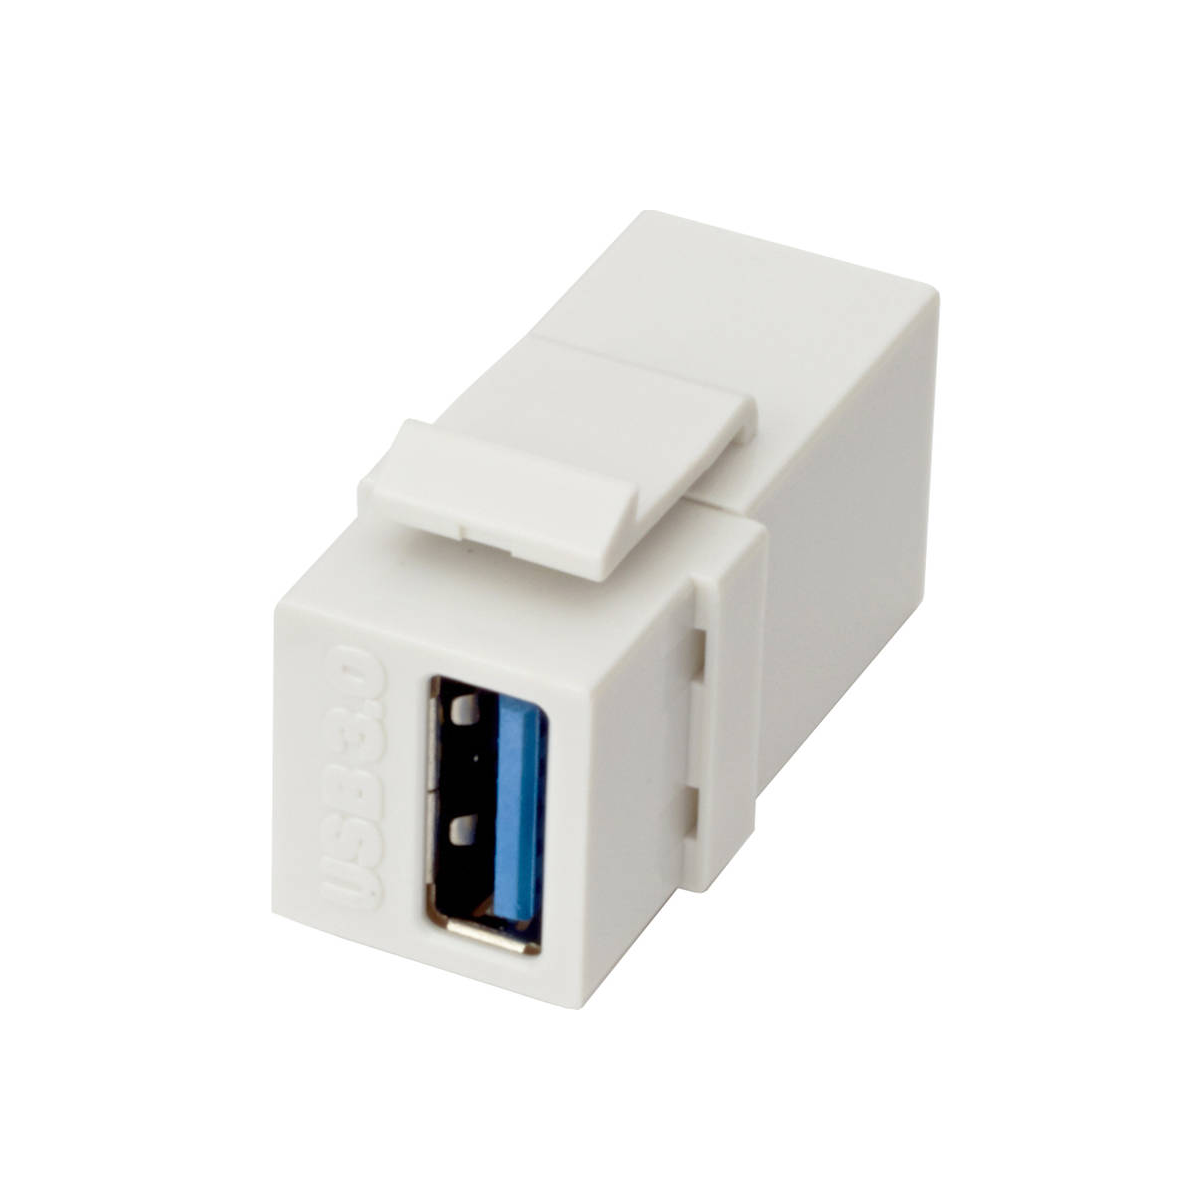 Excel 1PT USB 3.0 Keystone Adaptor White